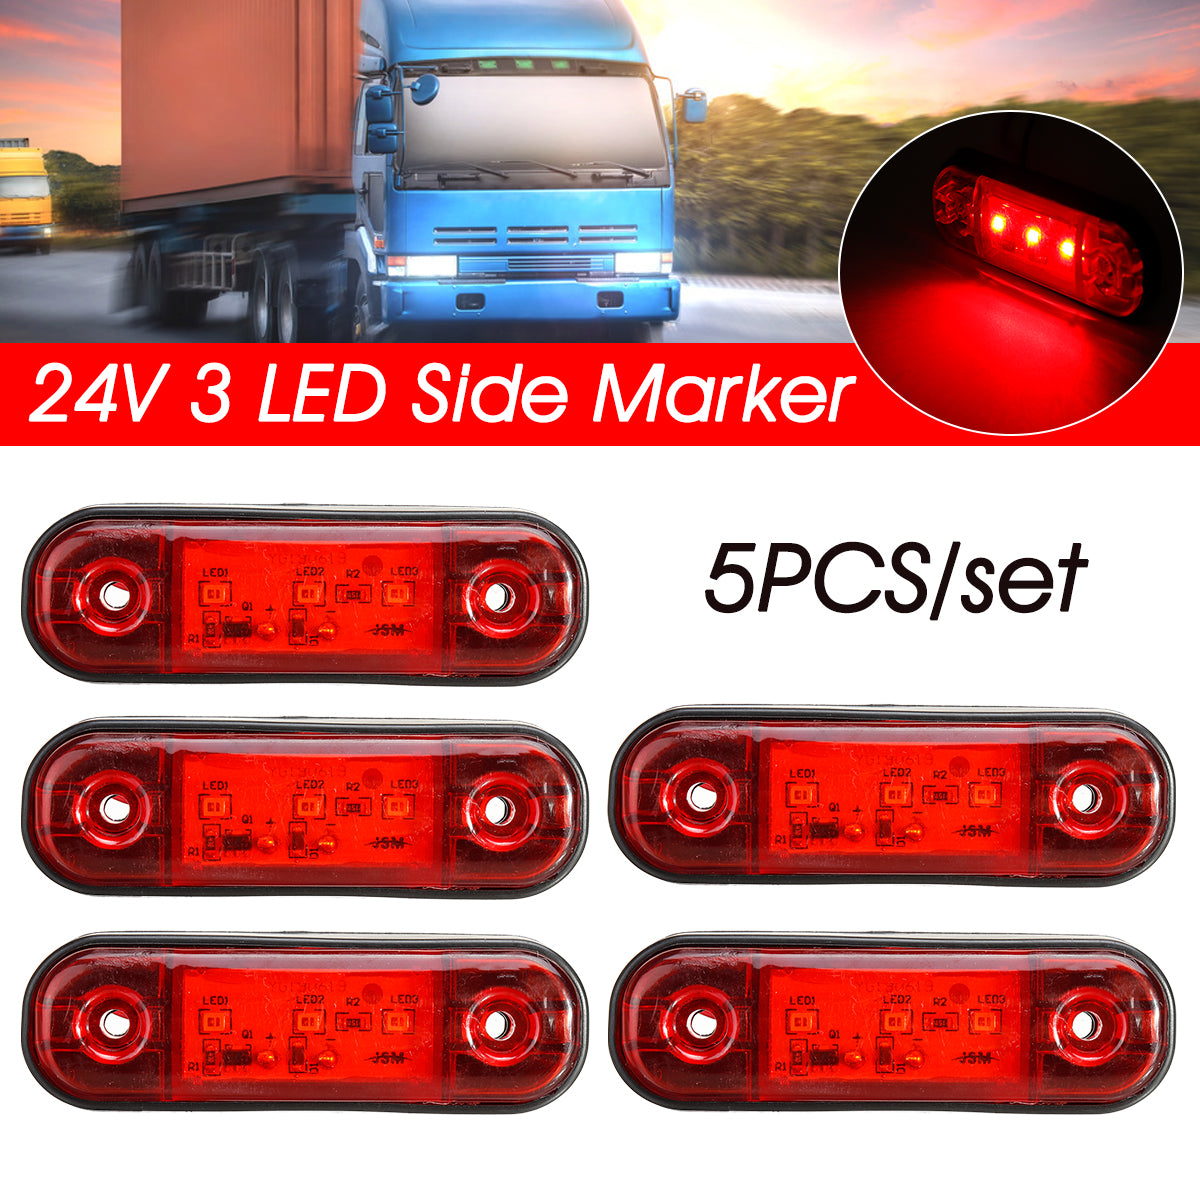 Red 5PCS 12V-24V 3 LED Side Marker Indicator Light Waterproof for Trailer Truck Bus Lorry Van